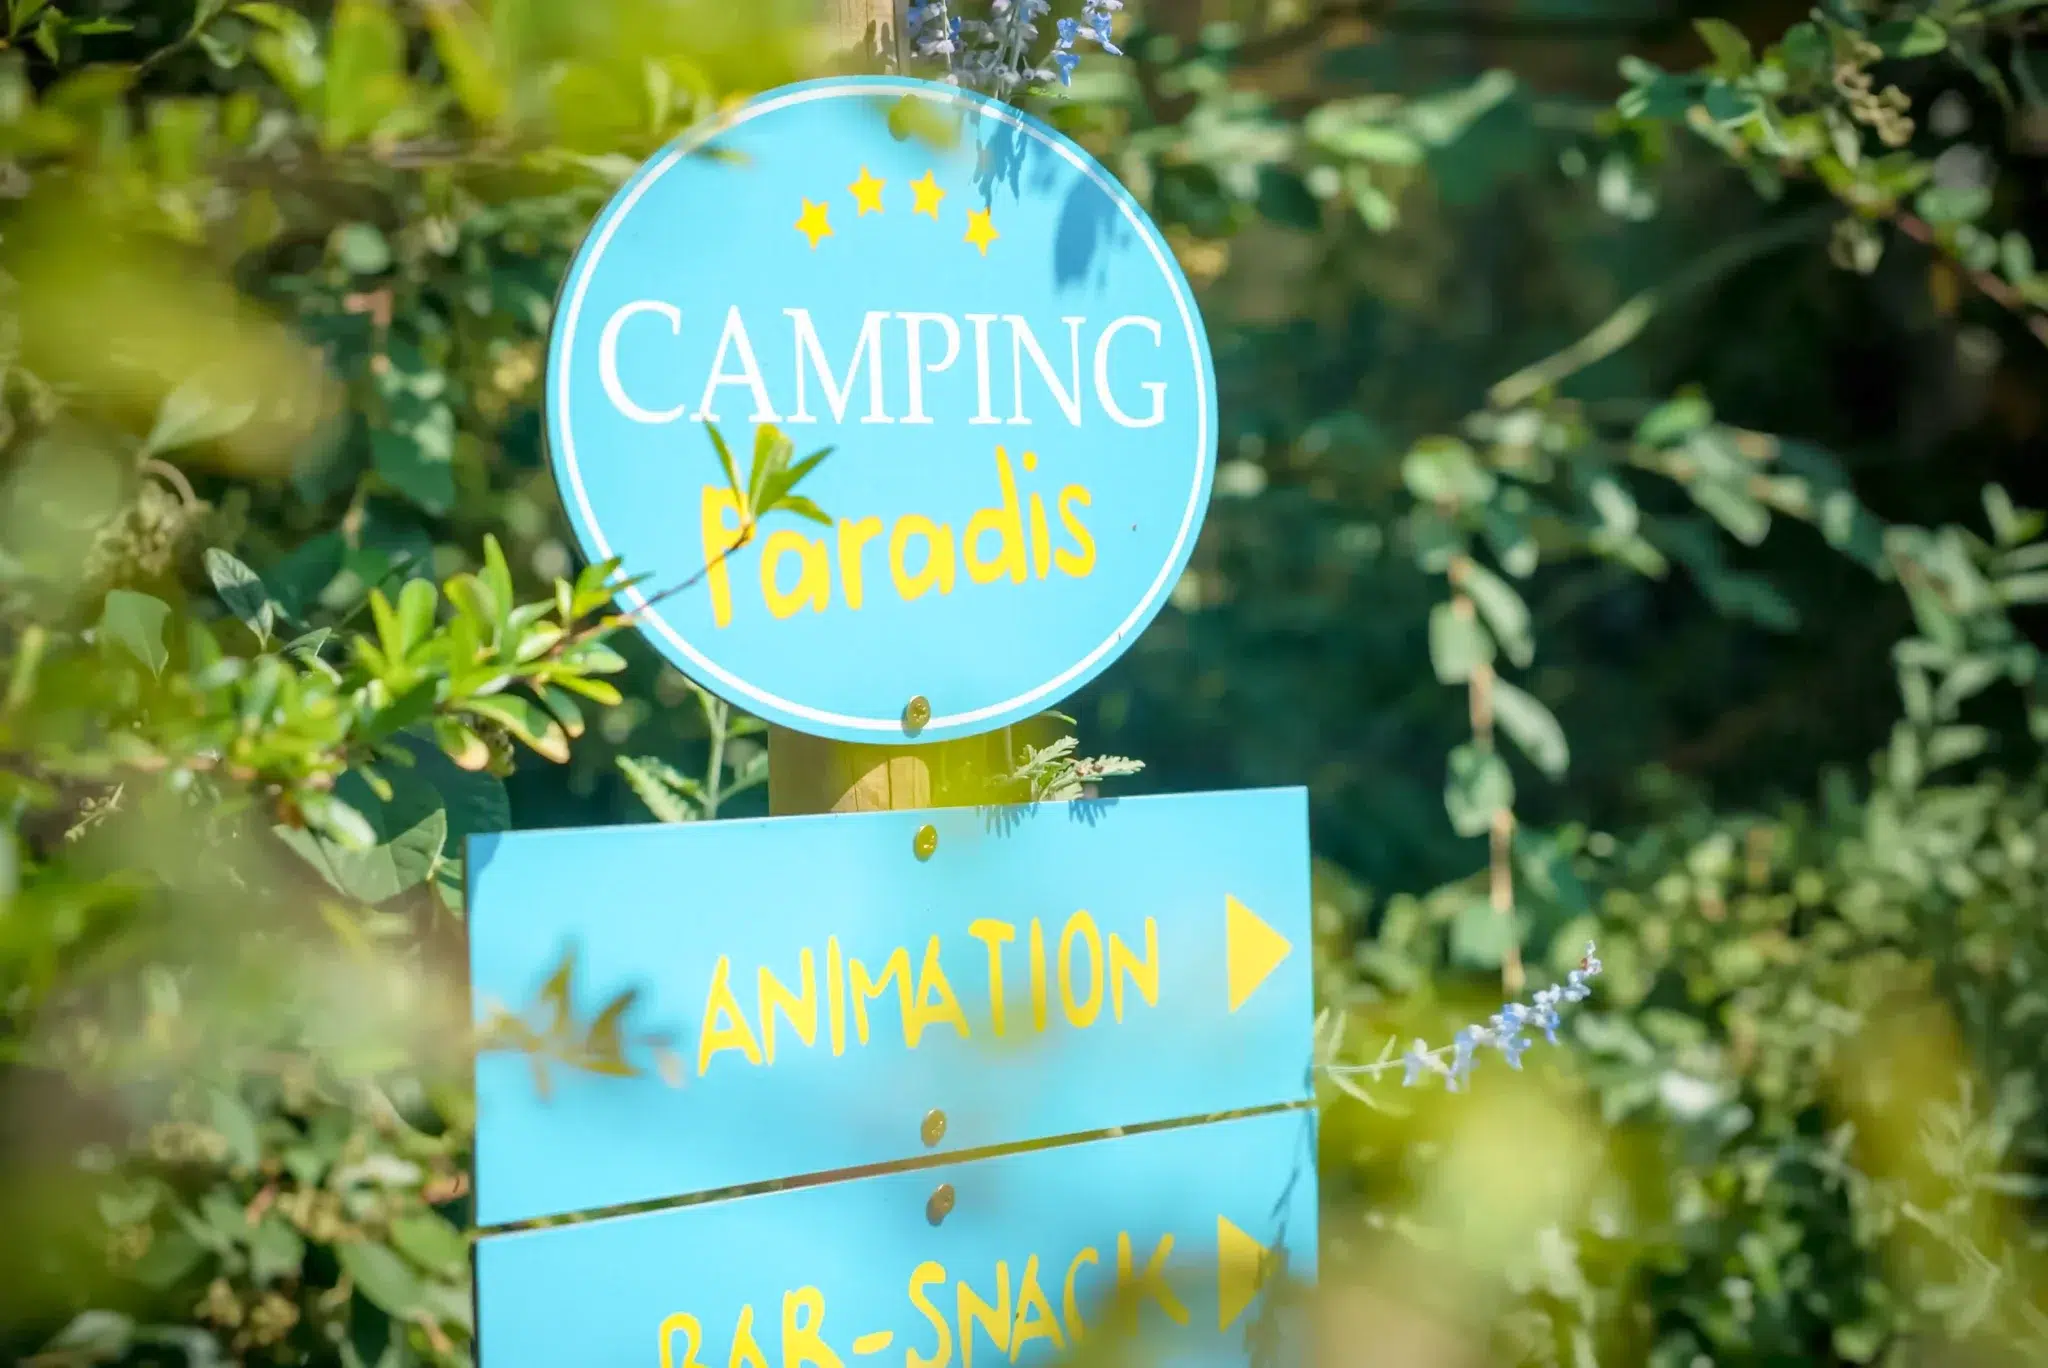 Camping Aude convivial 4 stars